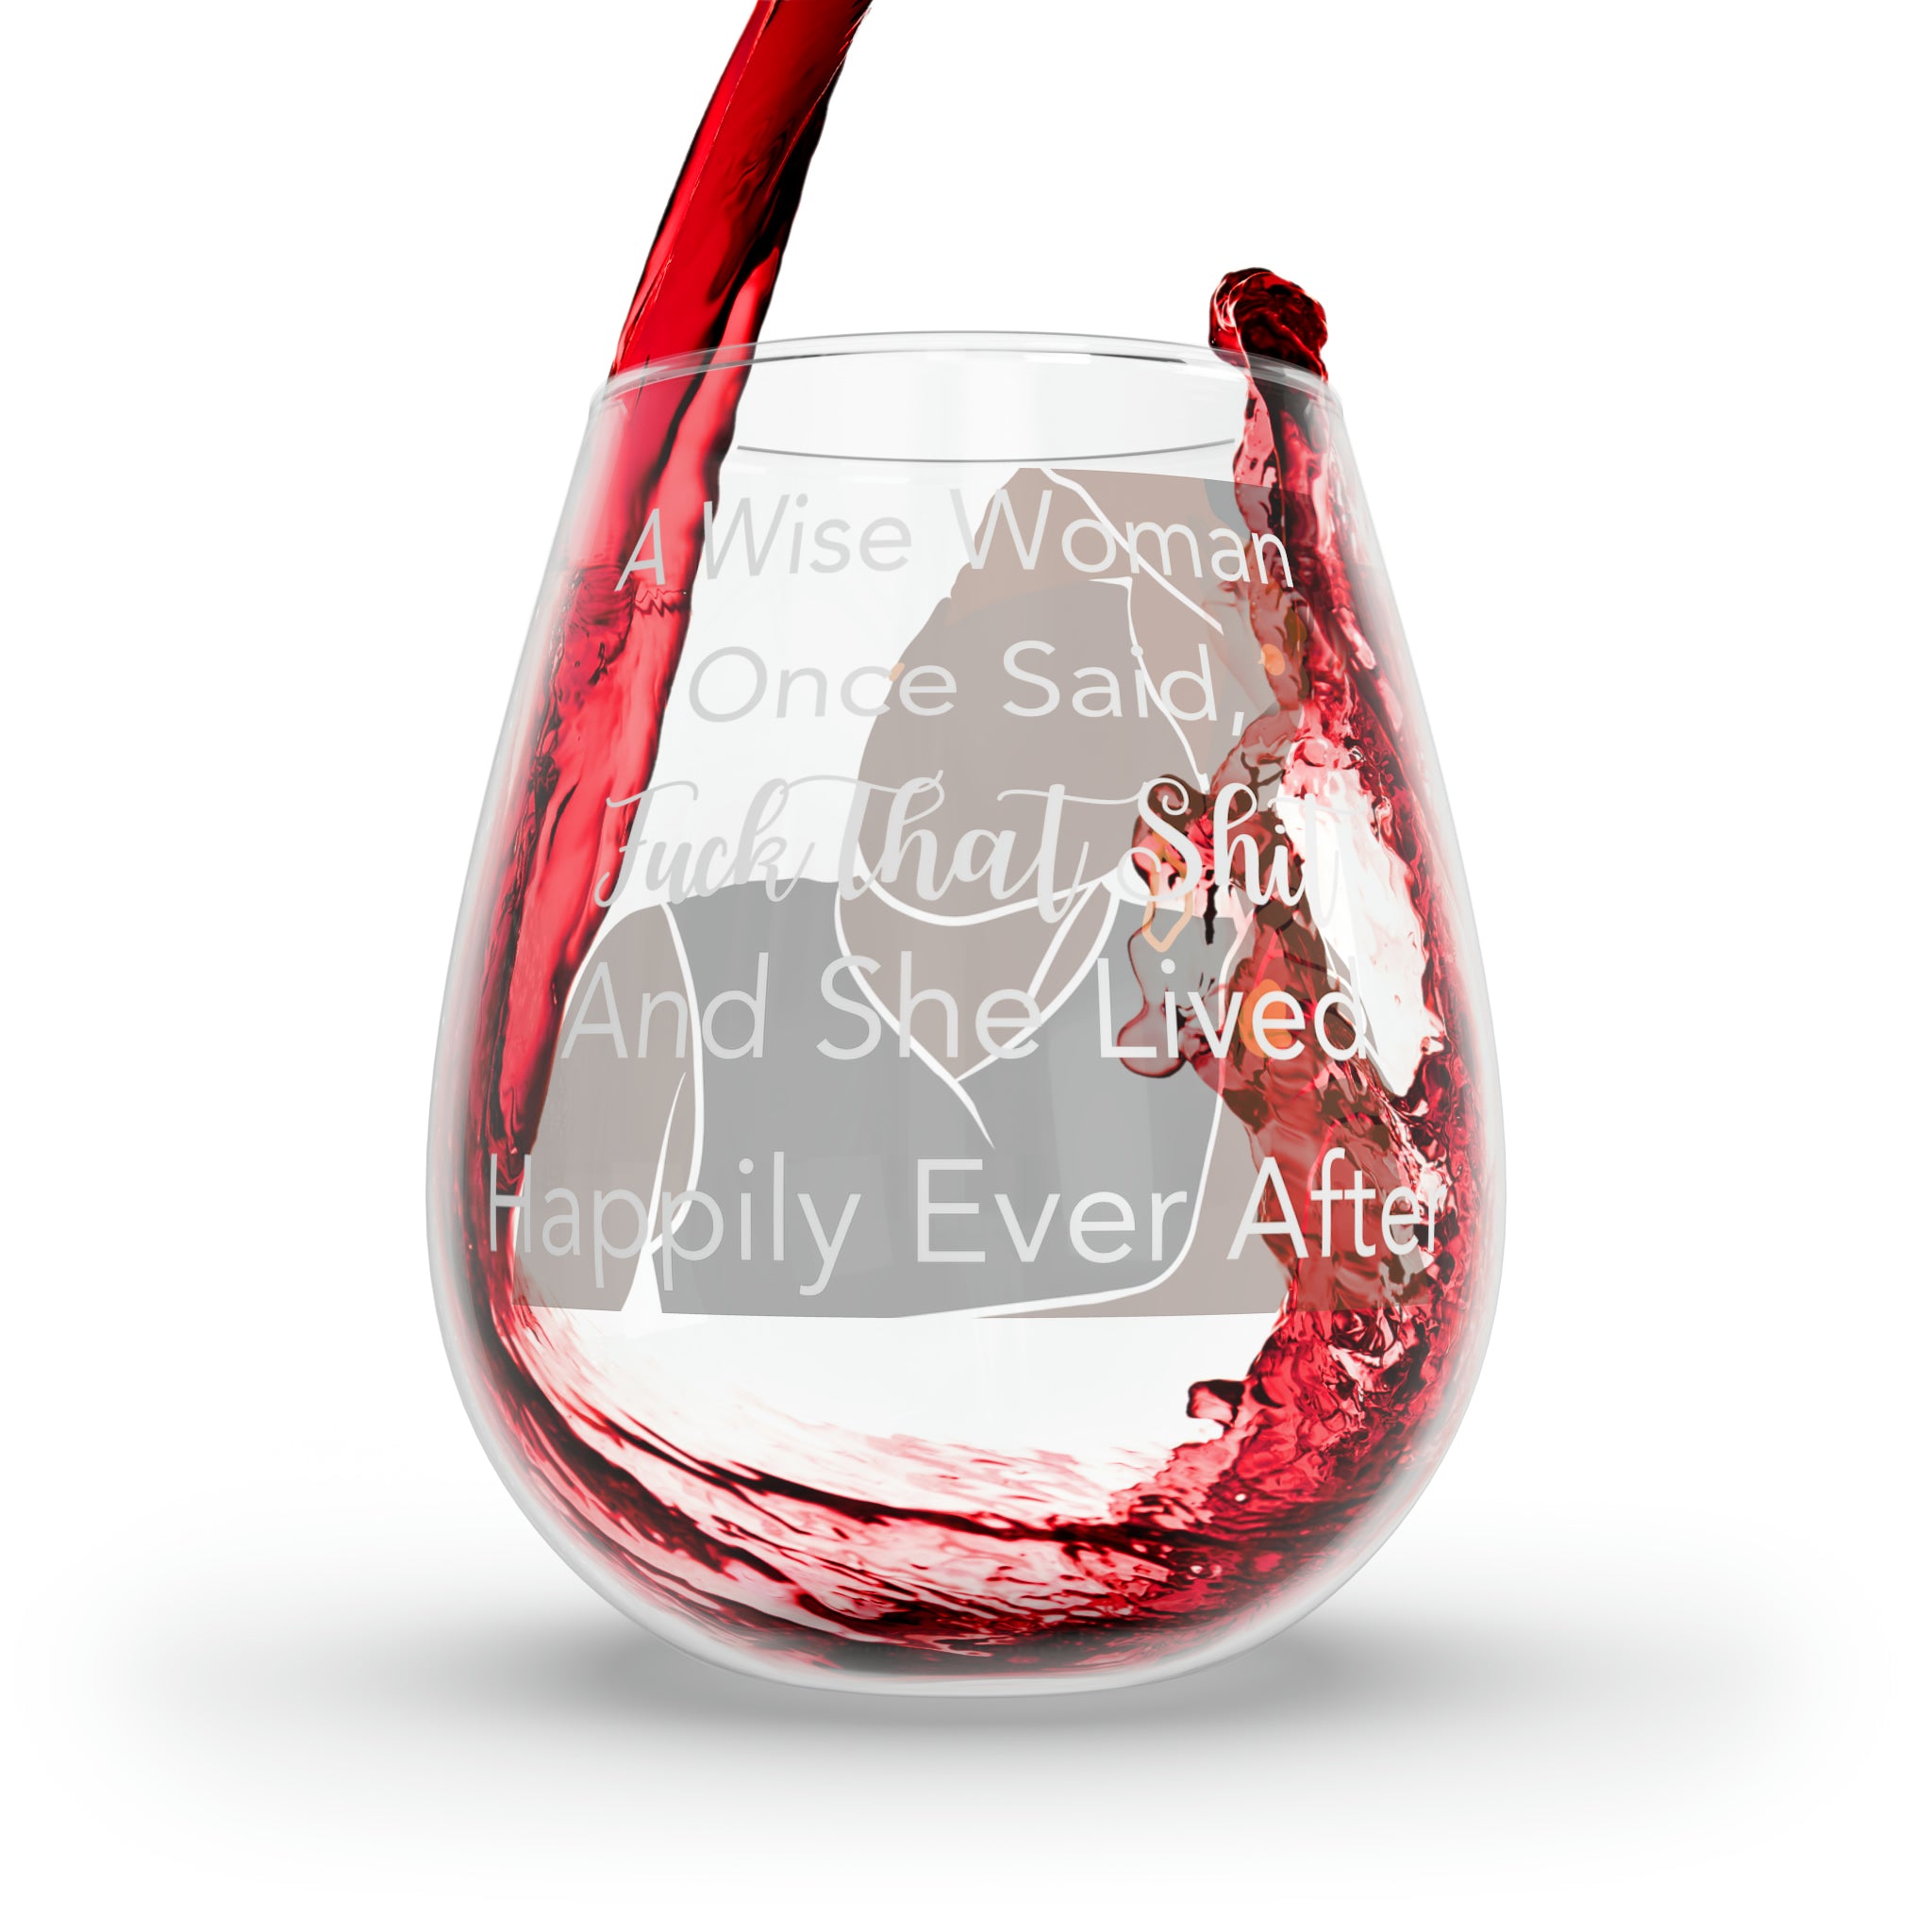 A Wise Woman - Stemless Wine Glass, 11.75oz